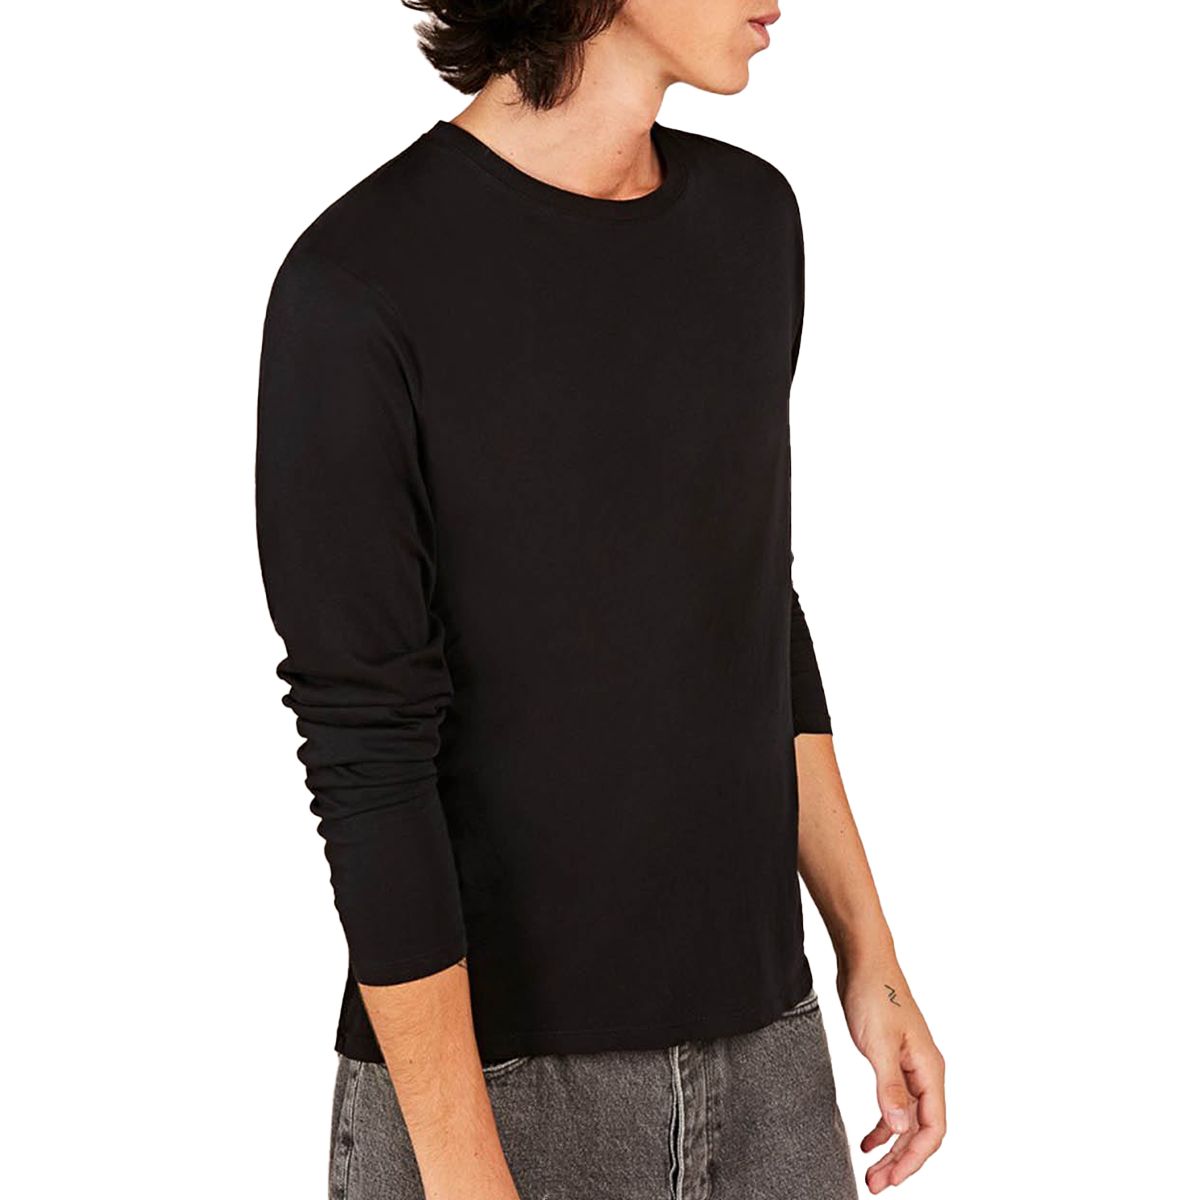 Black Long Sleeved T-Shirt